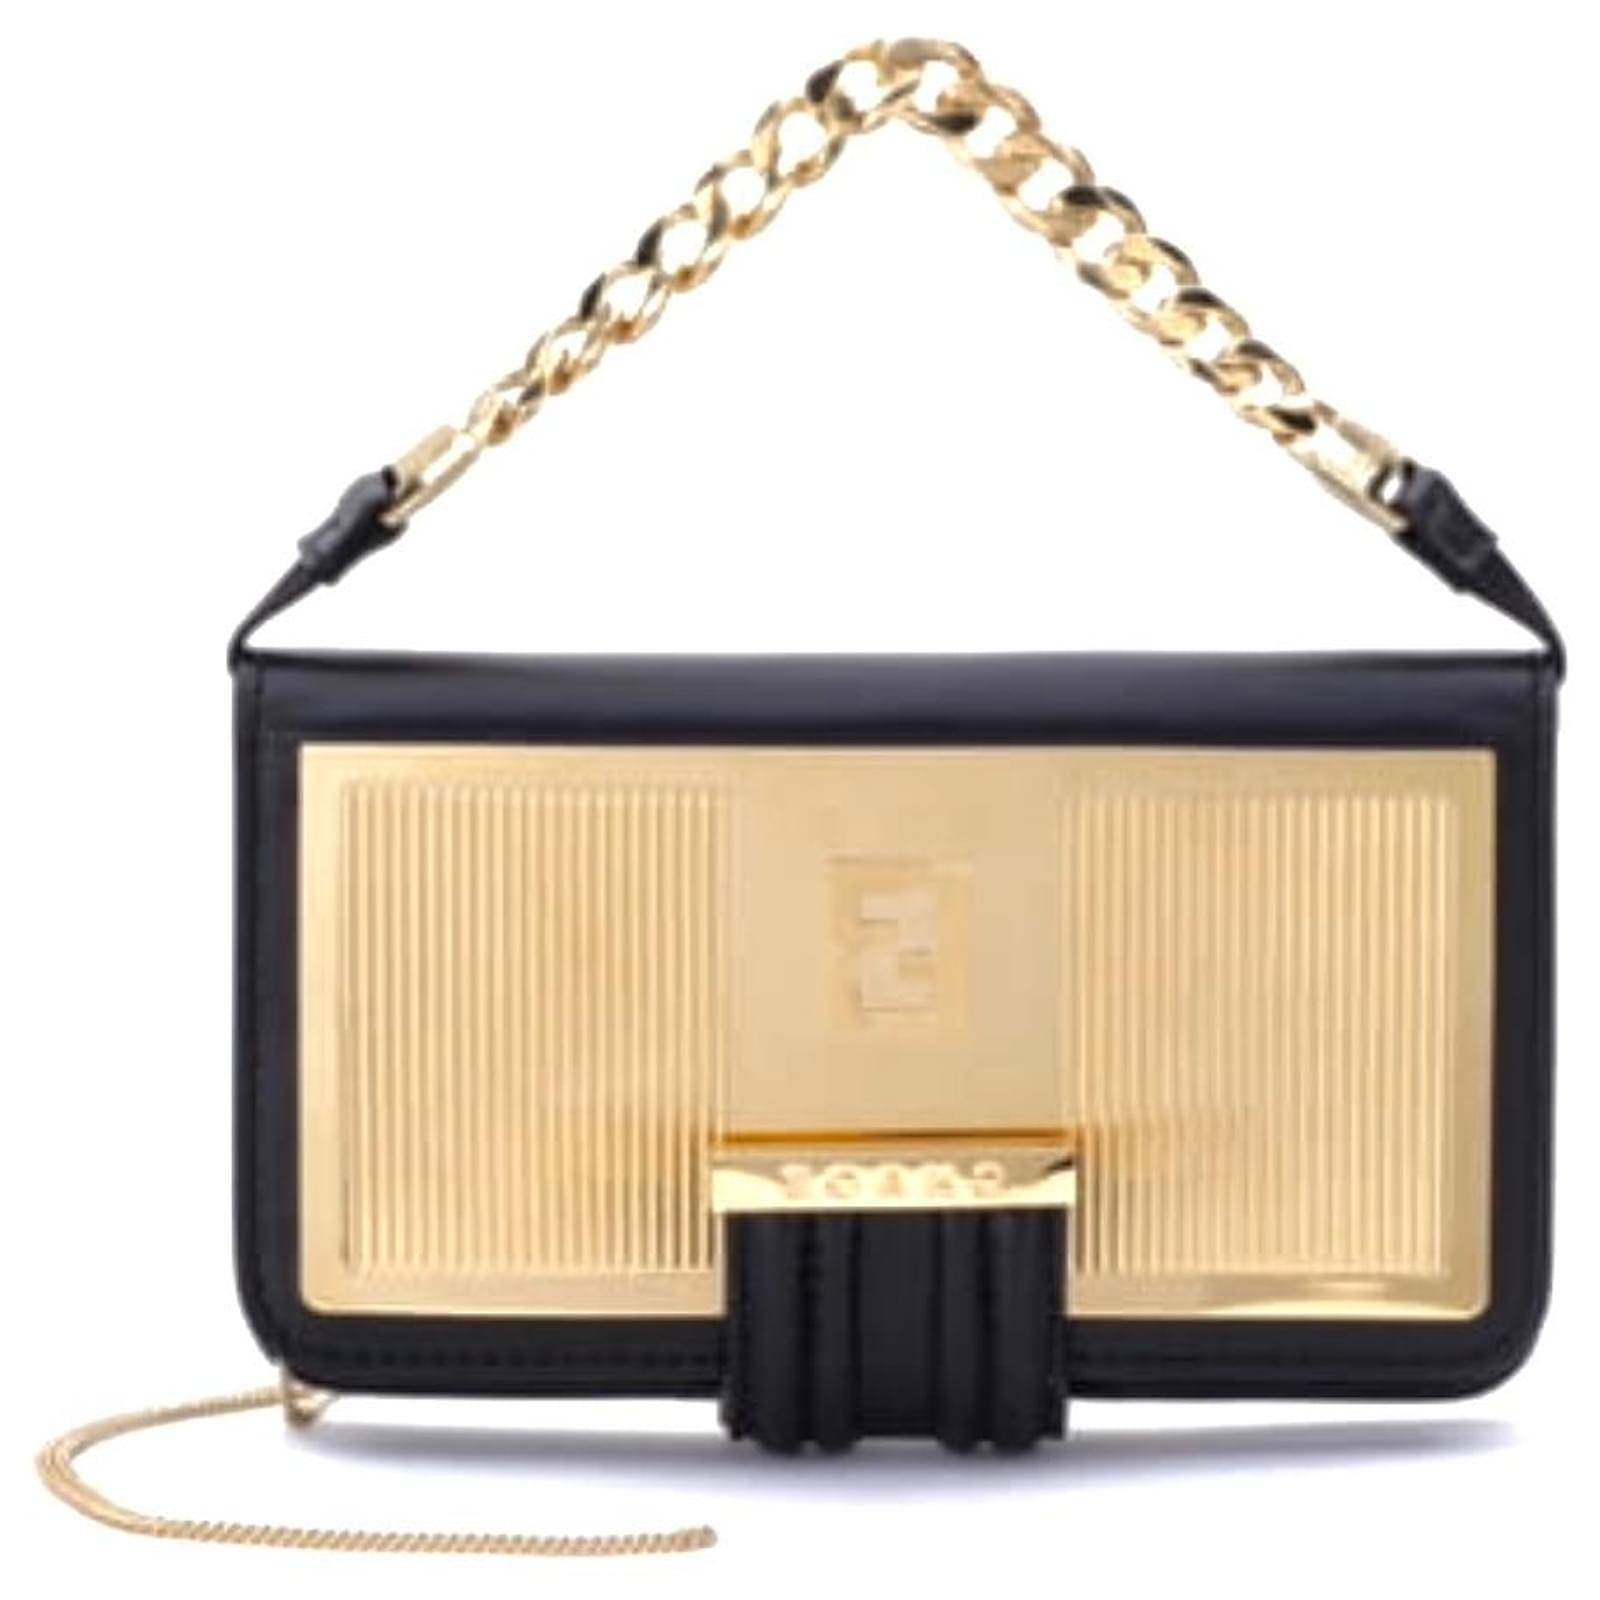 Fendi's Baguette iPhone X Case Cross-Body Bag